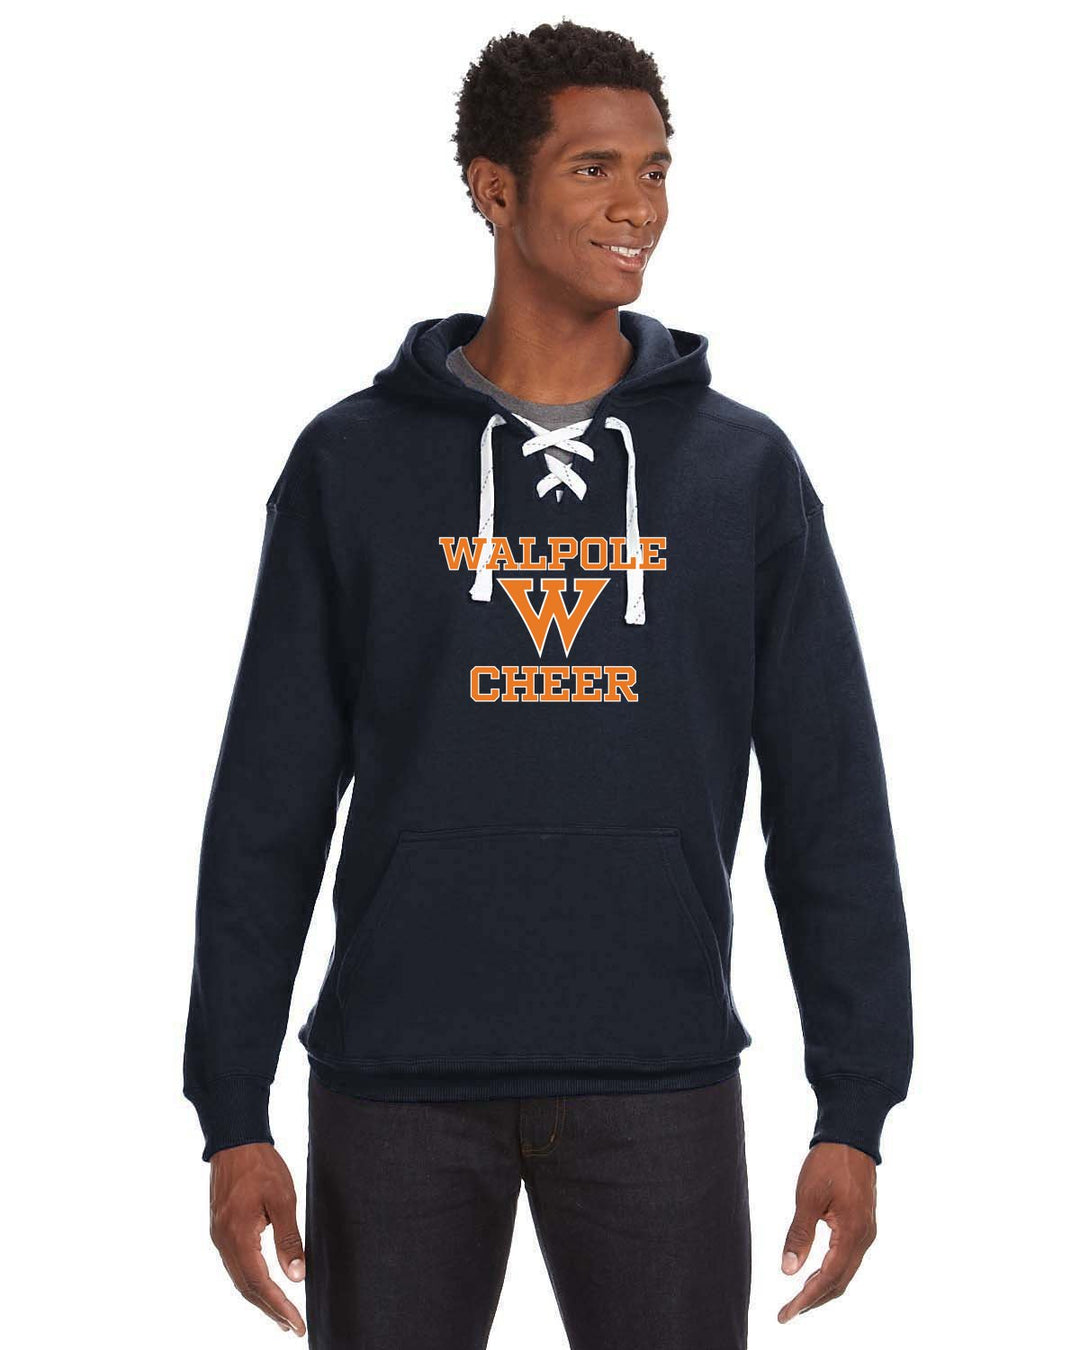 Walpole Youth Cheer Adult Sport Lace Hooded Sweatshirt (JA8830)